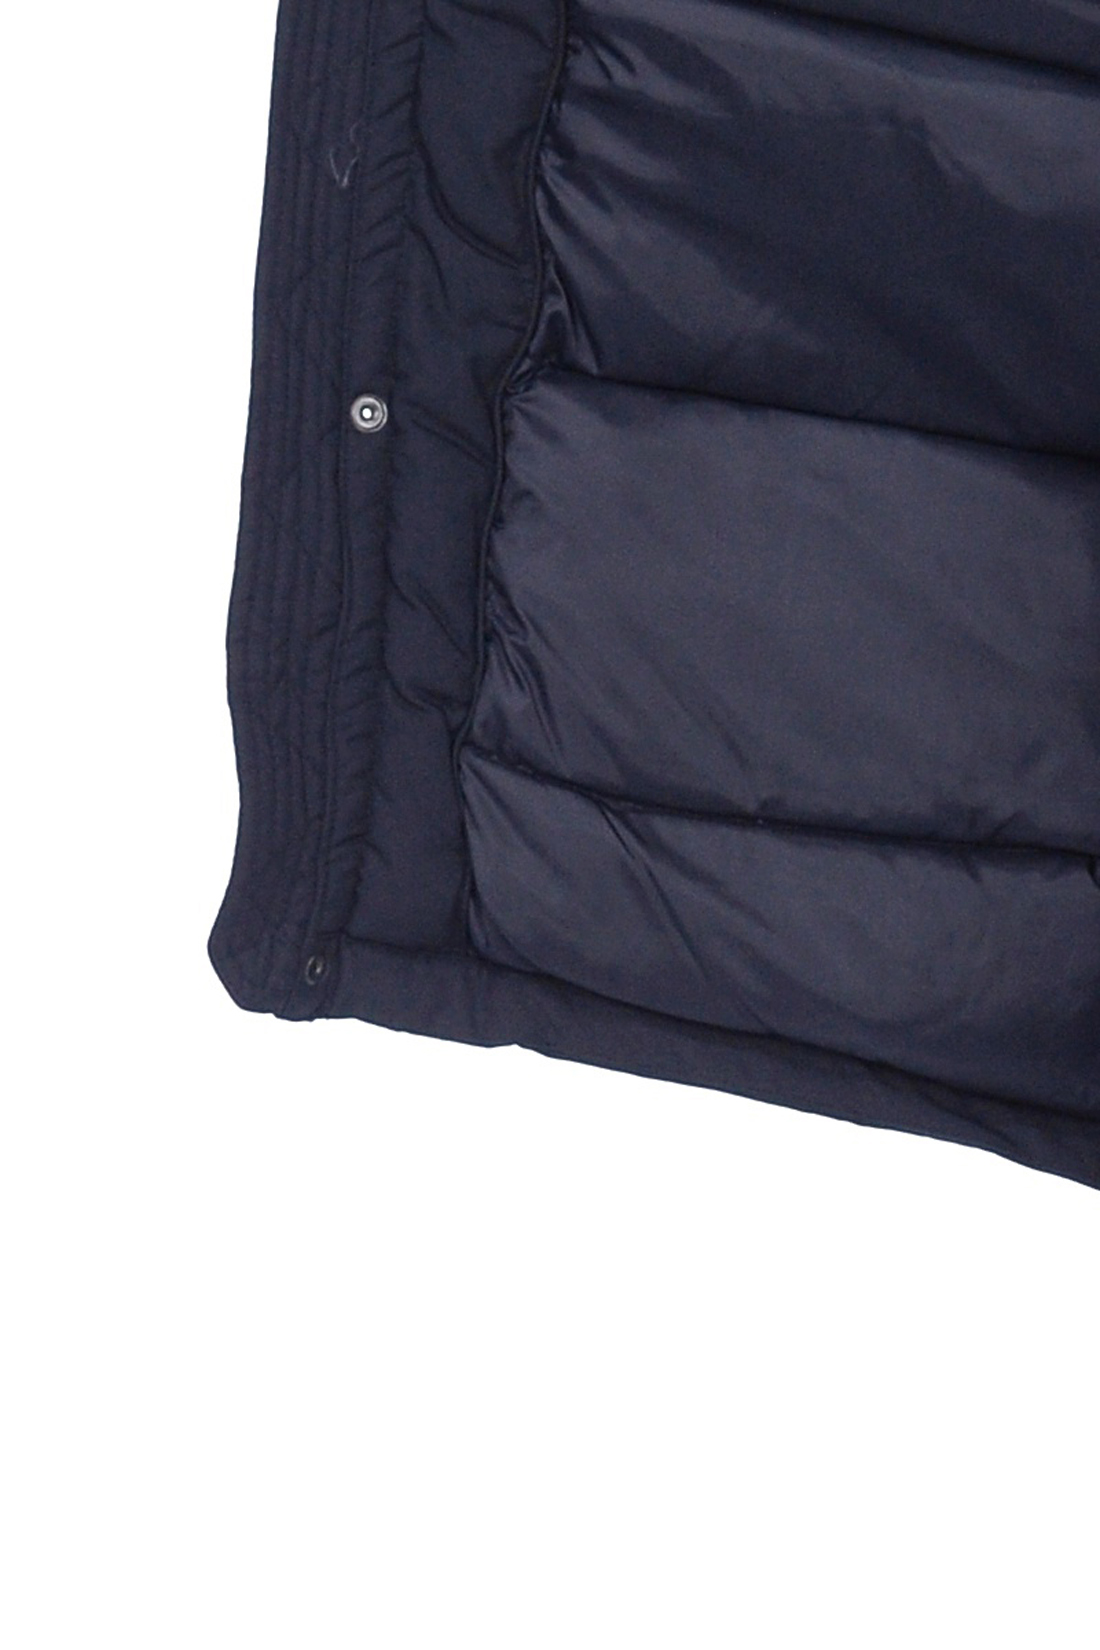 Пуховик-парка с накладными карманами (арт. baon B508538), размер XXL, цвет синий Пуховик-парка с накладными карманами (арт. baon B508538) - фото 4